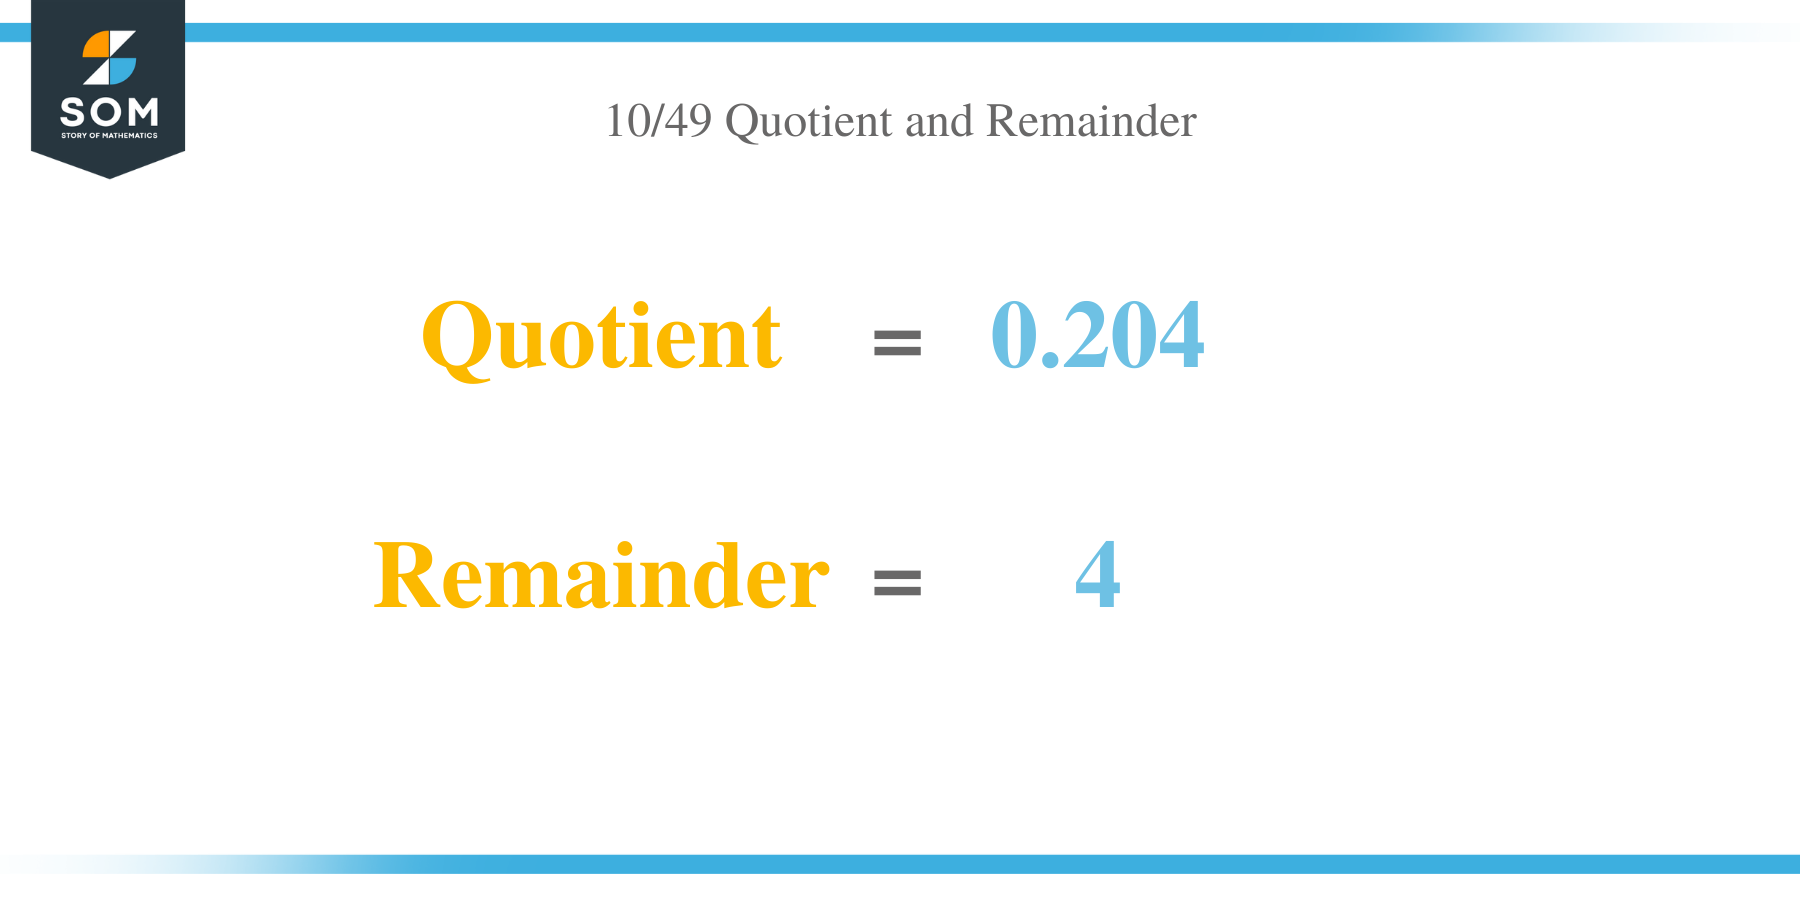 Quotient and Remainder of 10 per 49